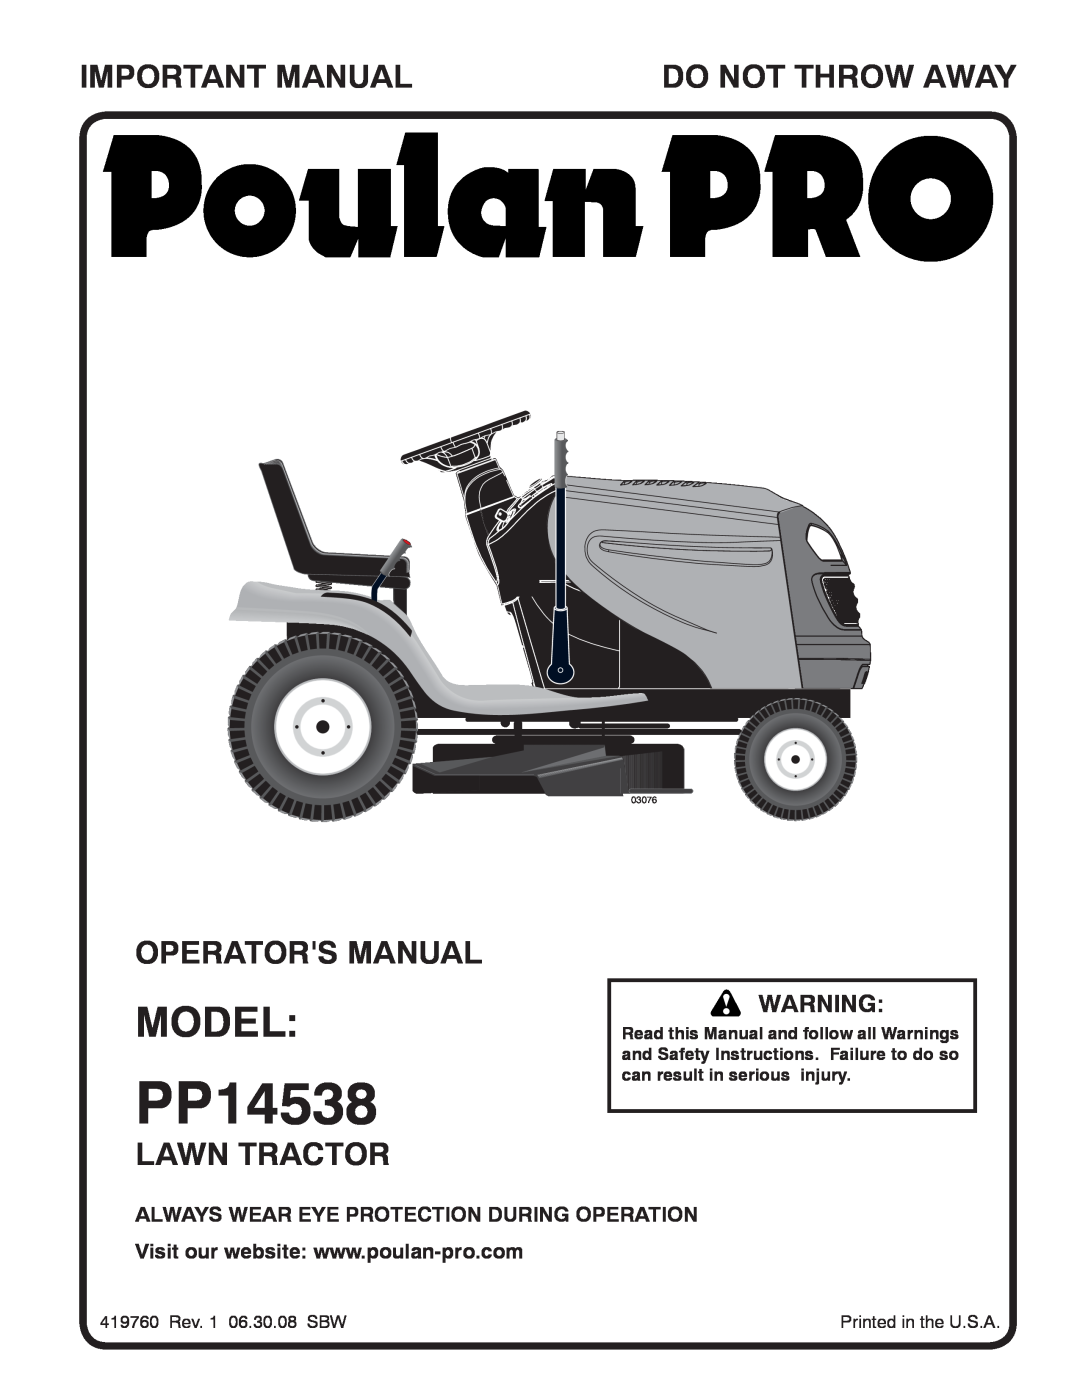 Poulan PP14538 manual Important Manual, Do Not Throw Away, Operators Manual, Lawn Tractor, Model, 03076 